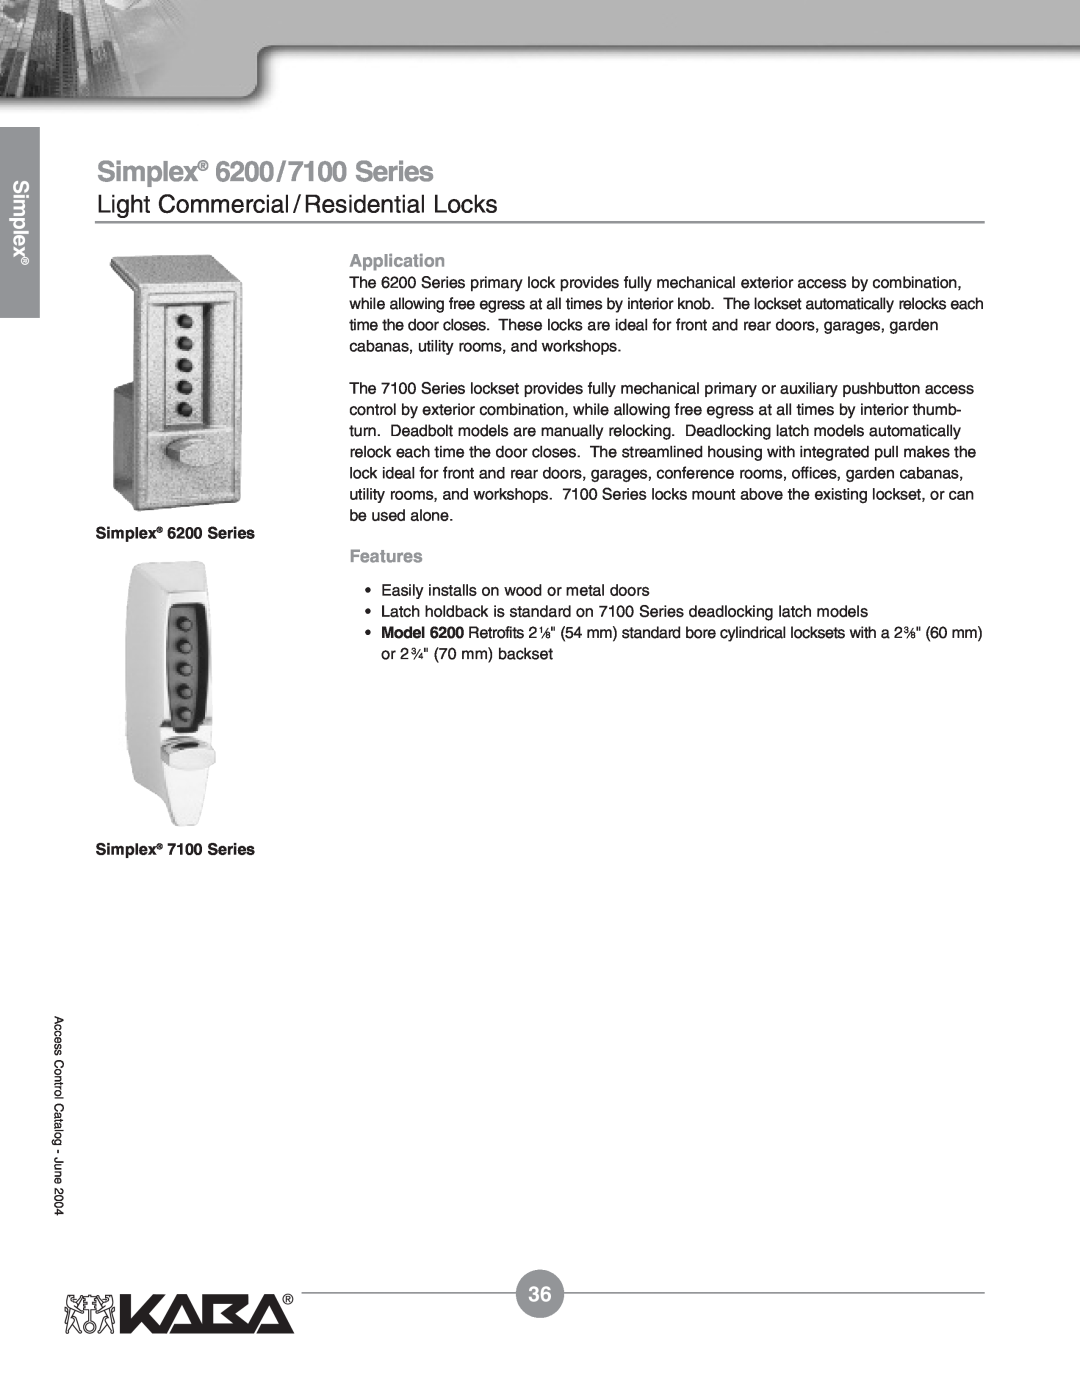 Assa Mechanical Pushbutton Locks Simplex 6200/7100 Series, Light Commercial / Residential Locks, Application, Features 